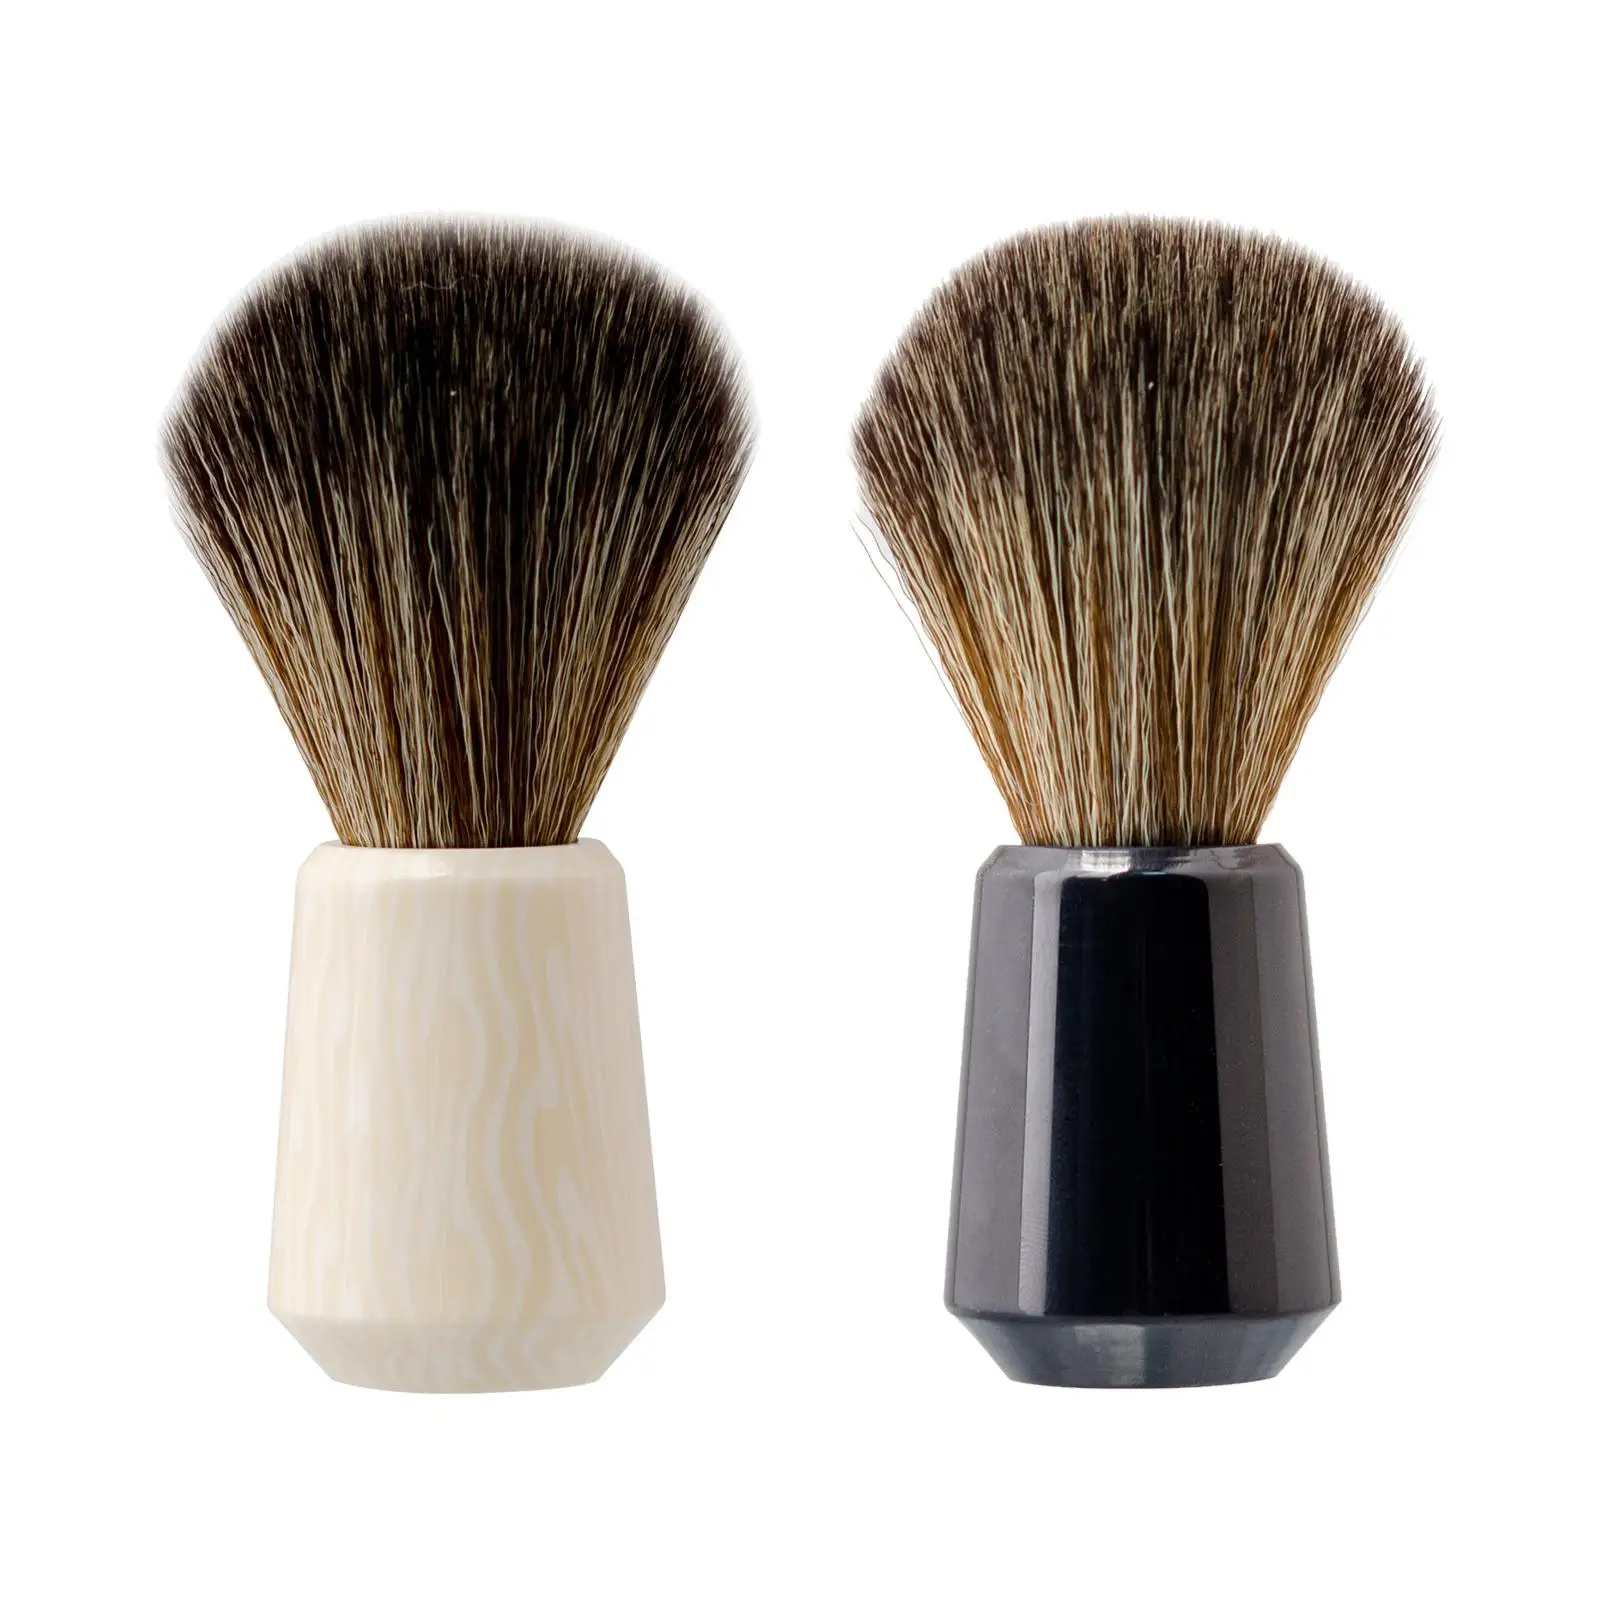 Shaving Brush Hair Salon Tool Professional for Father Husband Portable Cream Soap Brush Nylon Bristles for Salon Barbershop